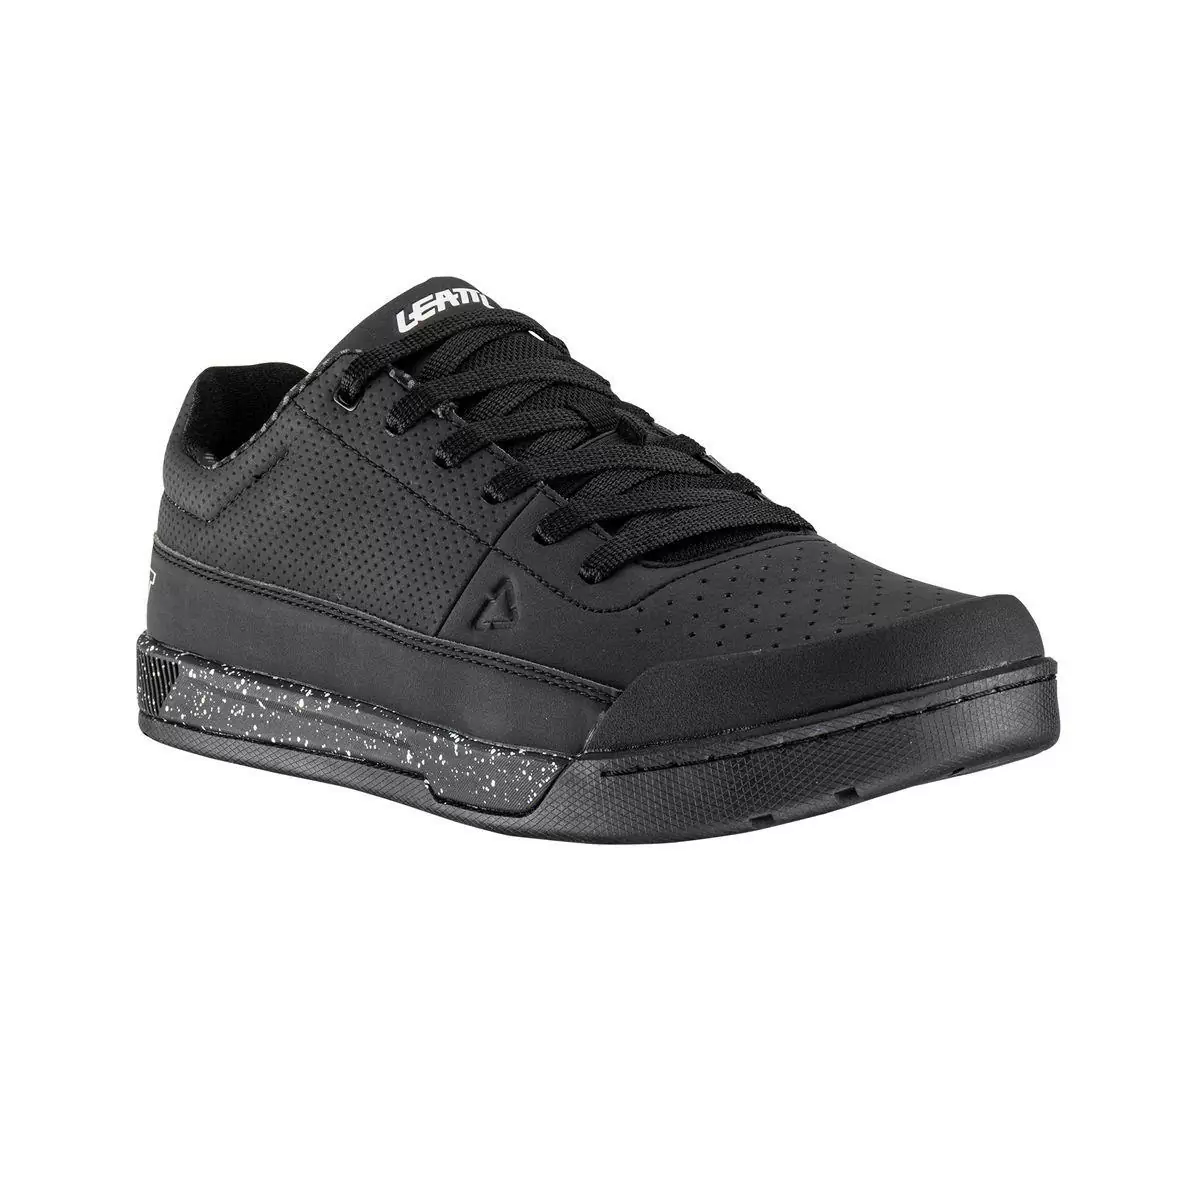 Mtb Shoes 2.0 Flat Black Size 44 #1